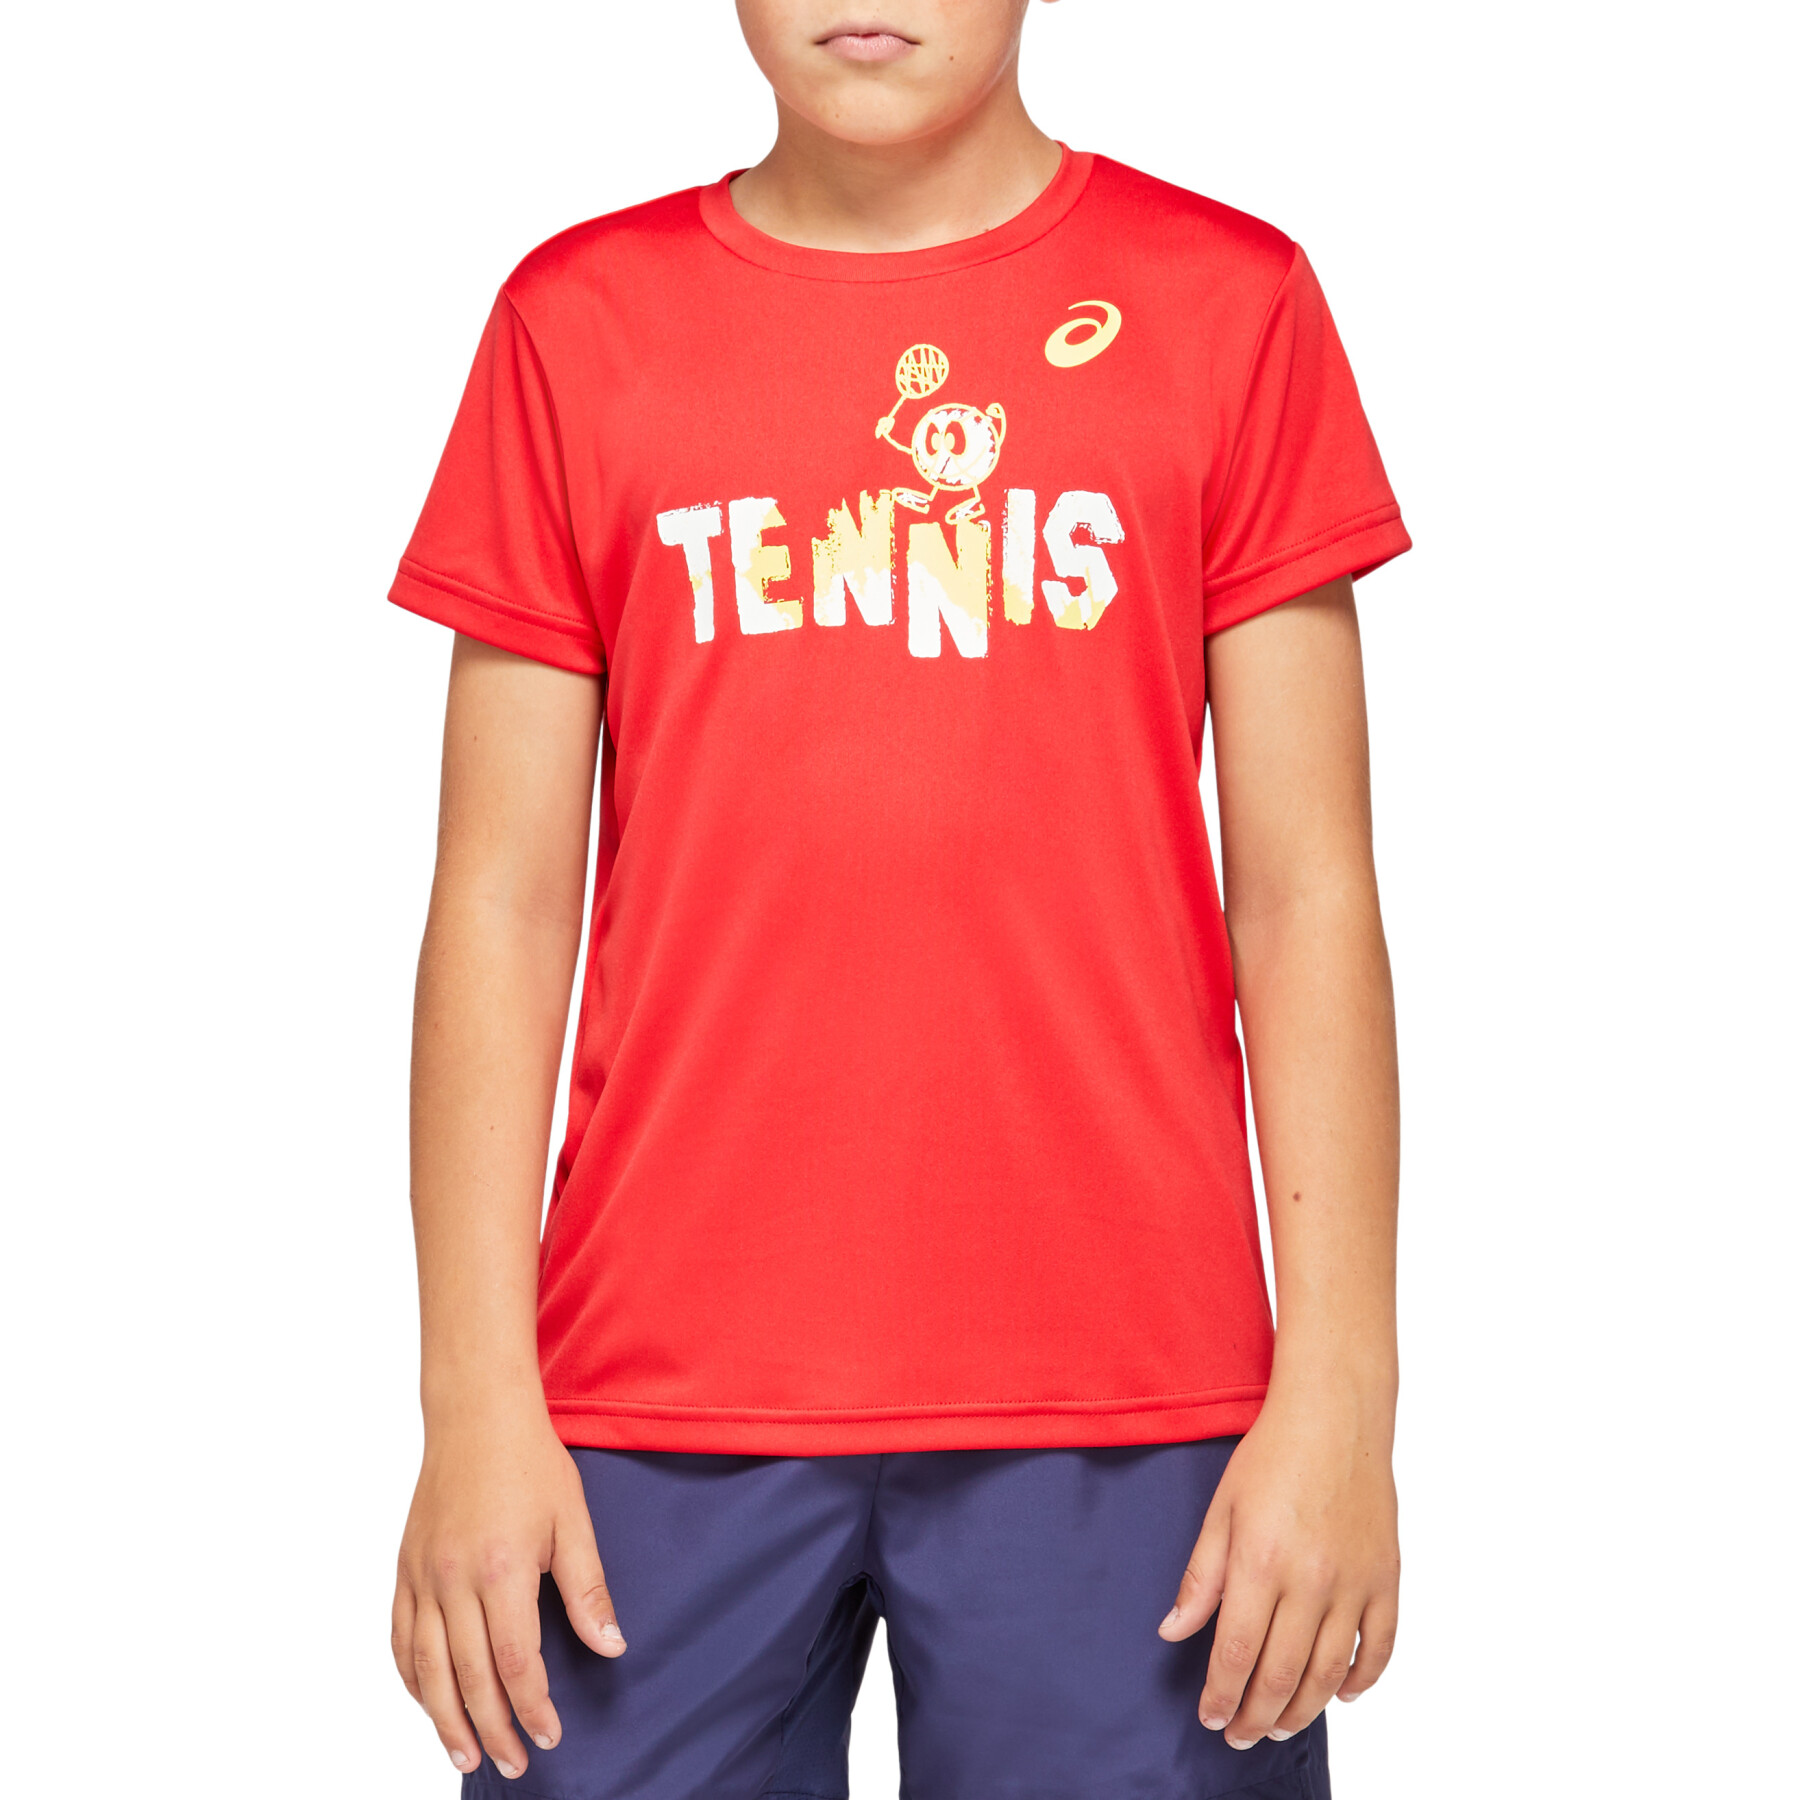 Kinder-T-shirt Asics Tennis Graphic